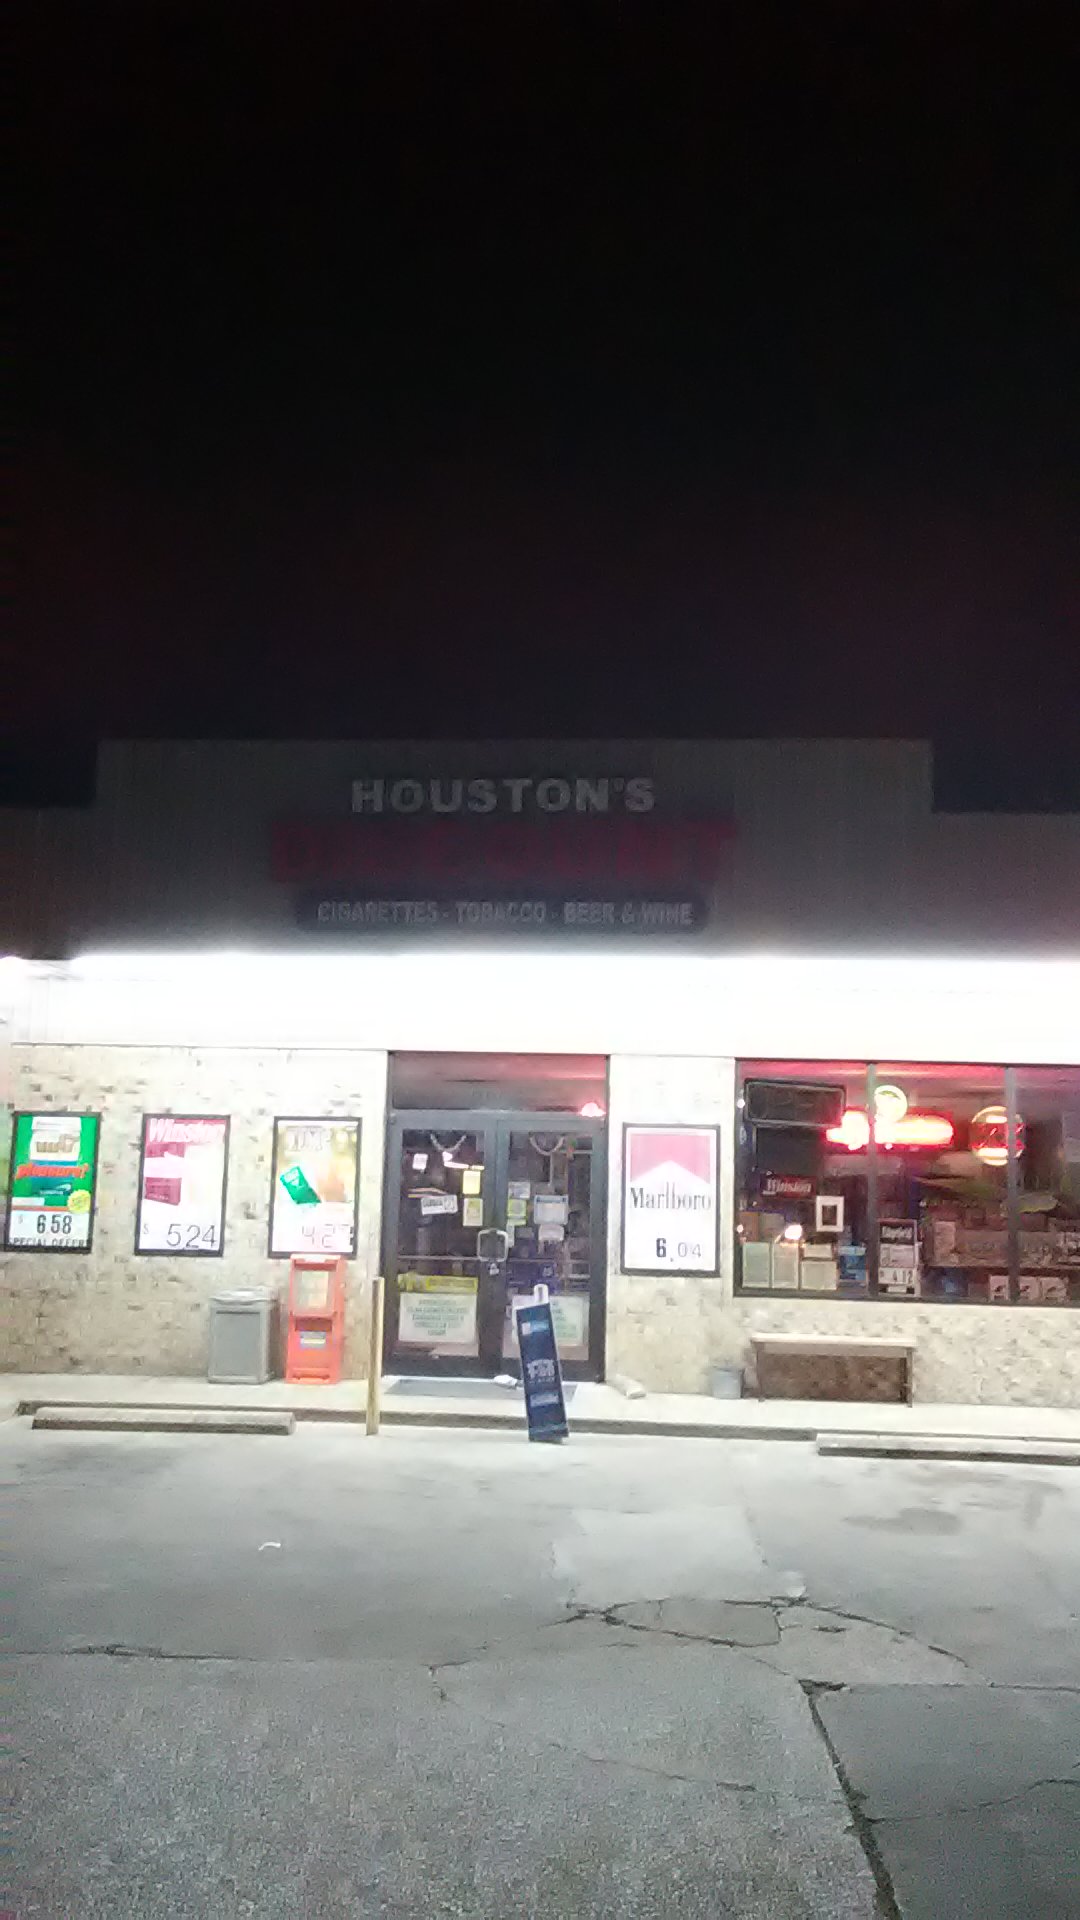 Houston's Discount Center